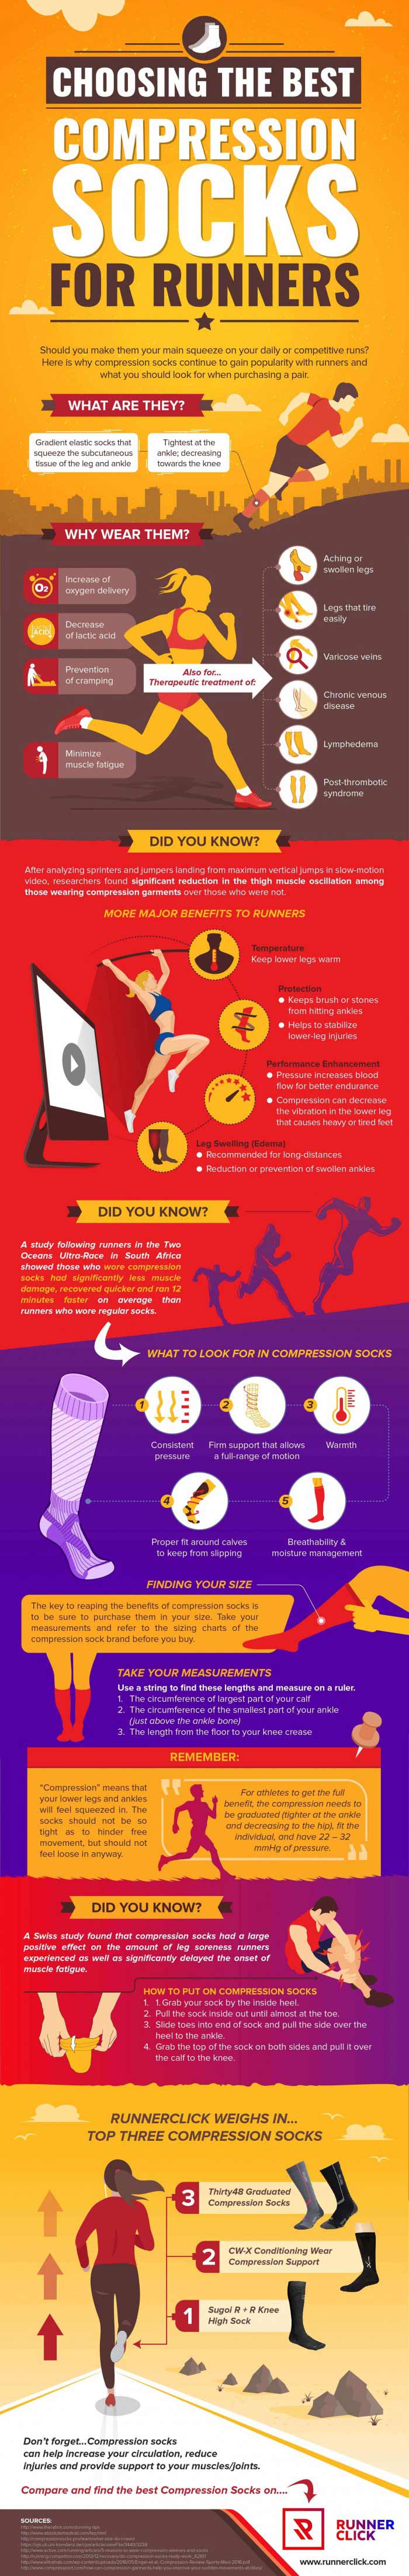 Benefits of Compression Socks